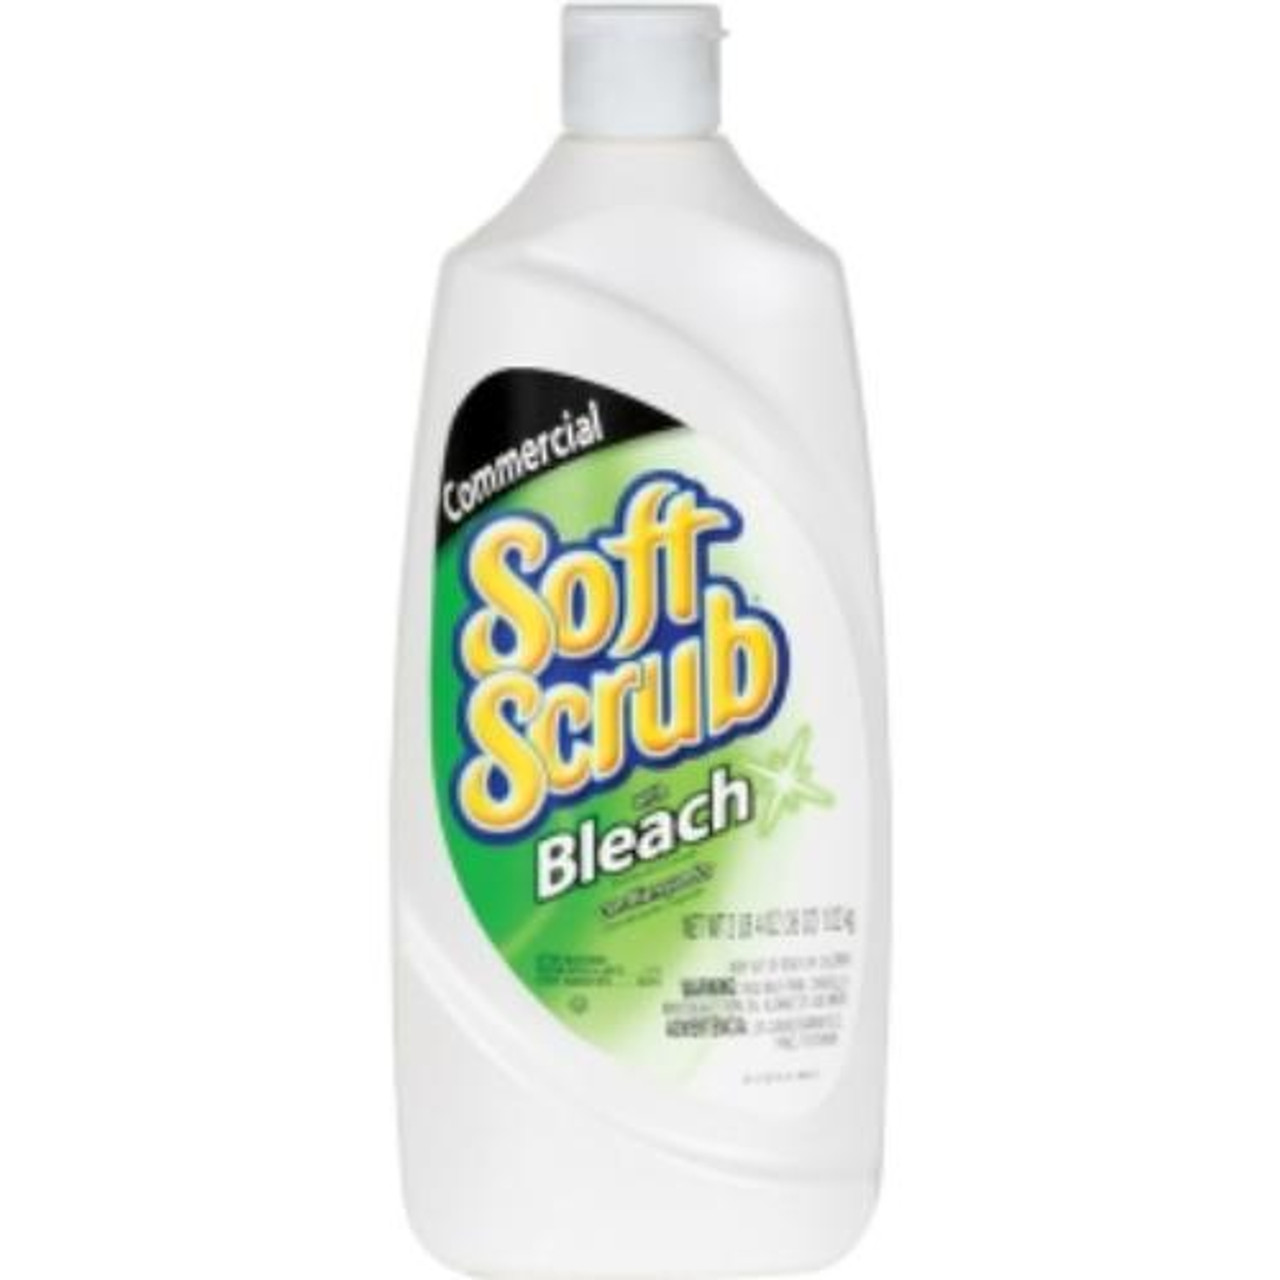 Soft Scrub Cleanser